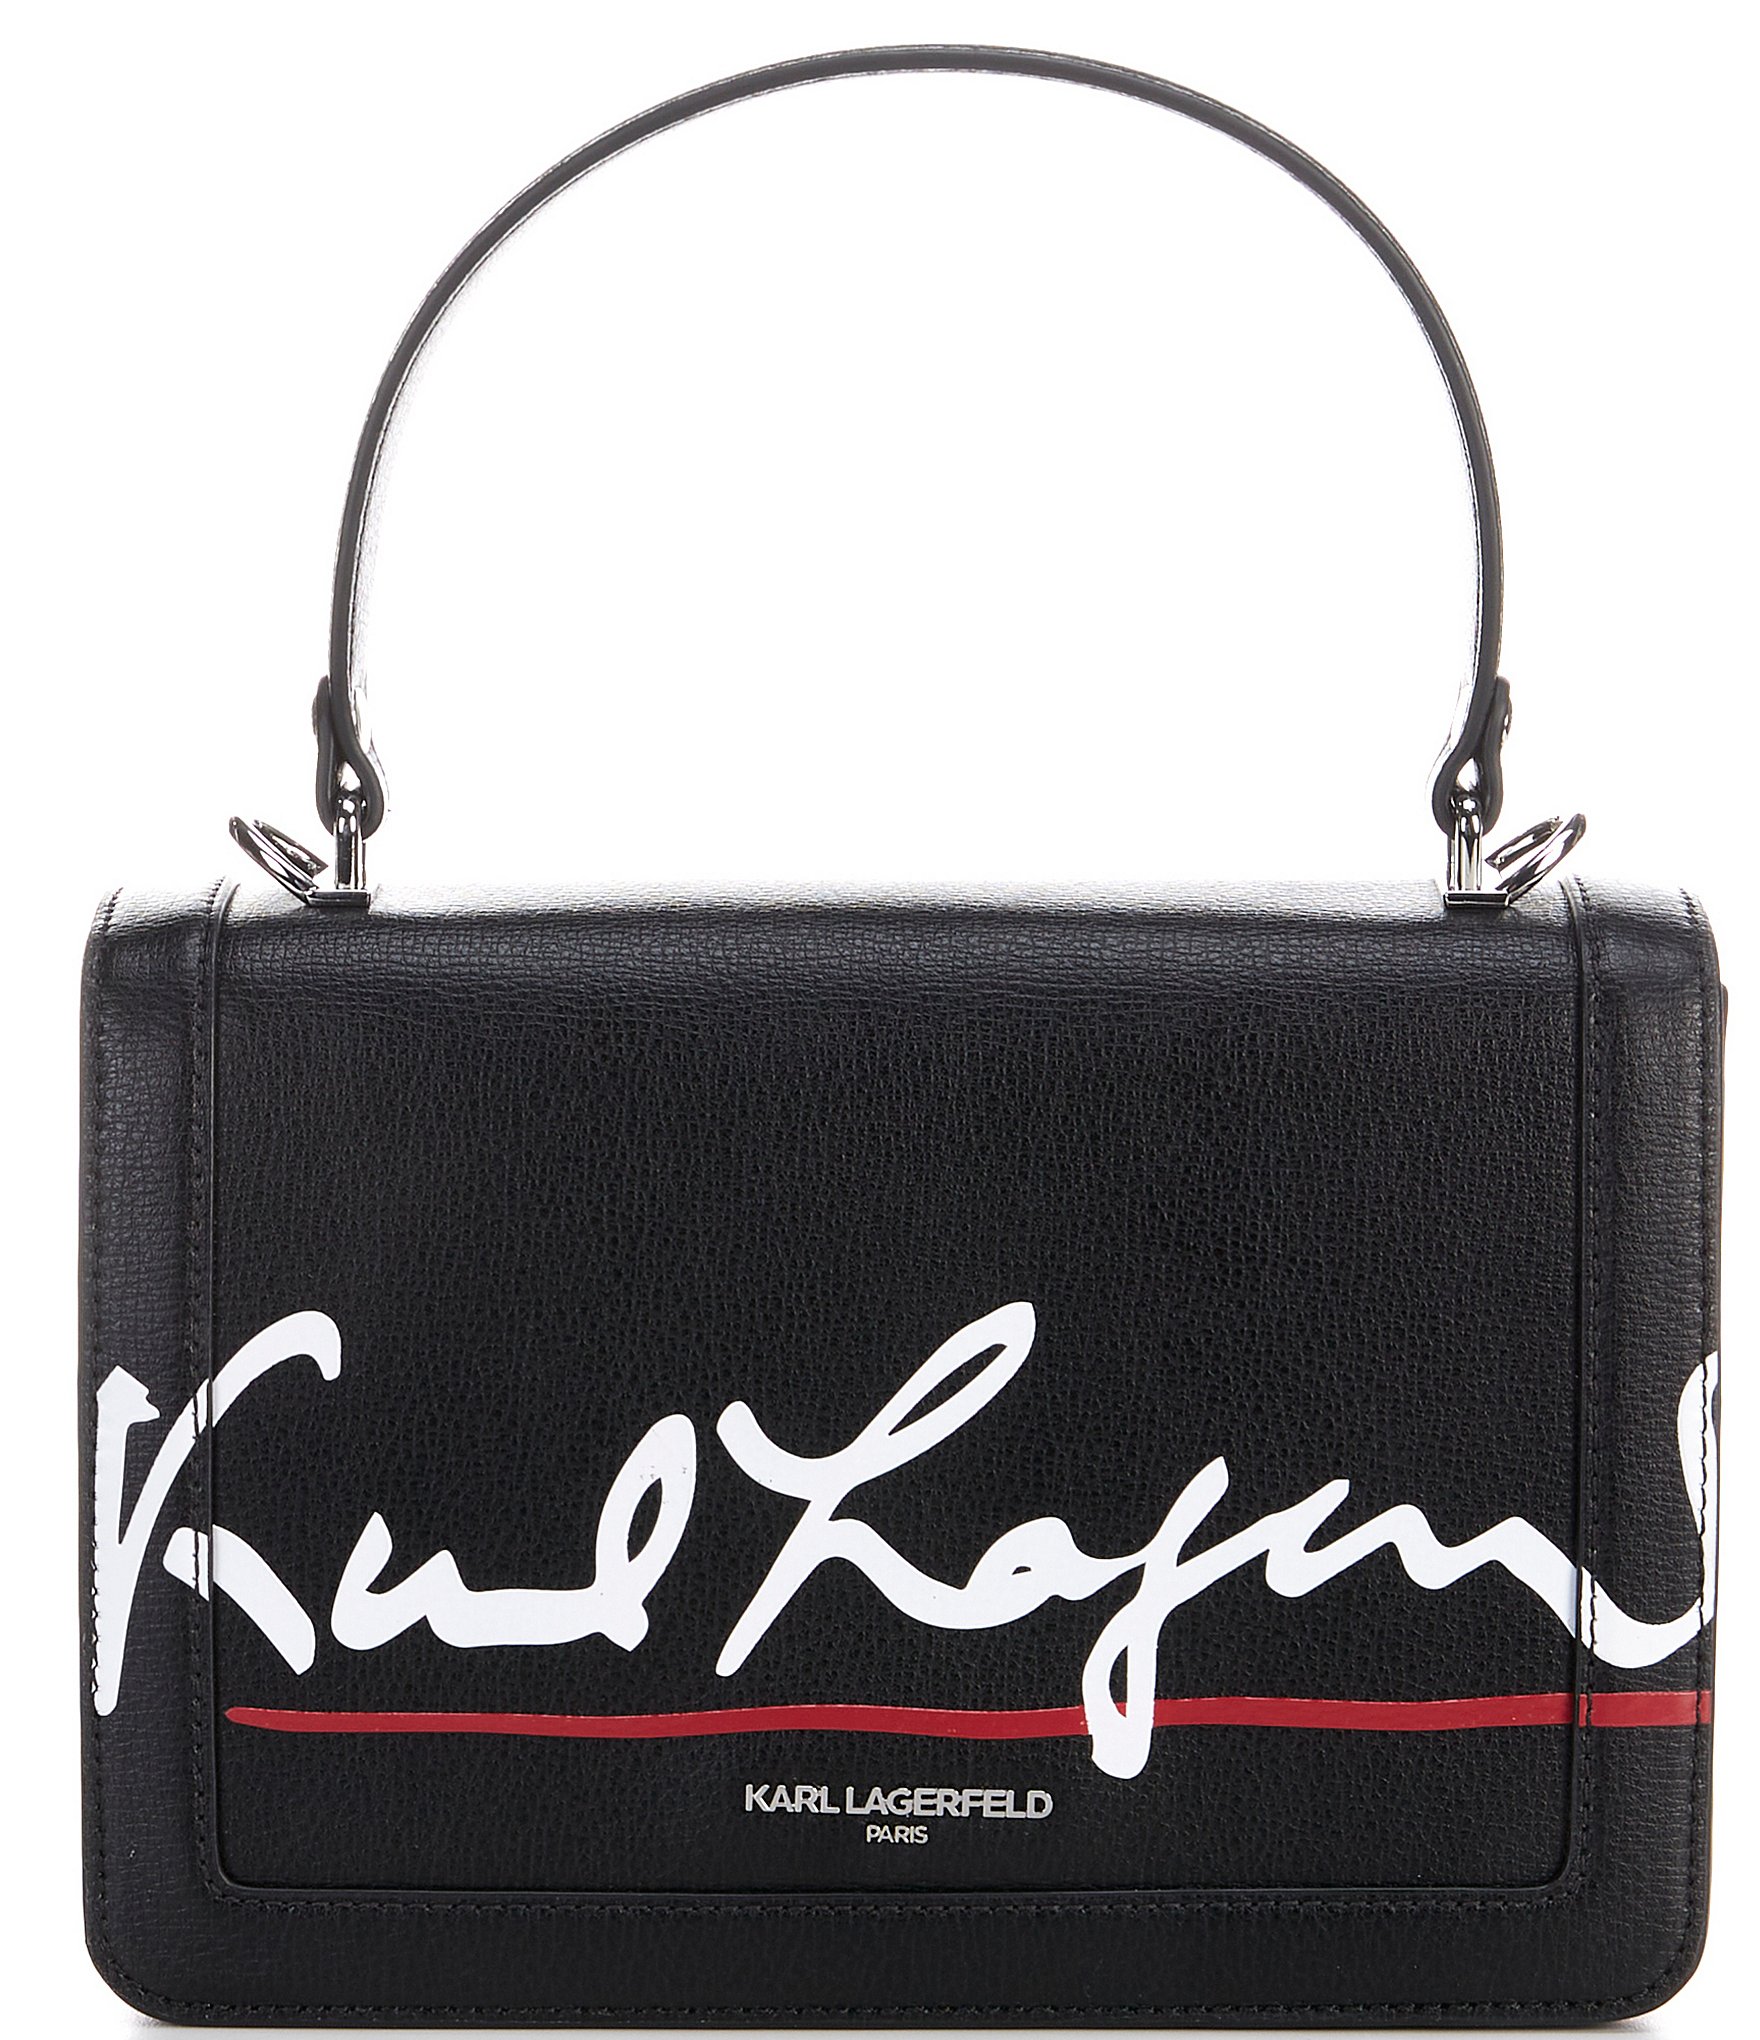 New Karl Lagerfeld Paris Sparkle Clutch, Wristlet, Black